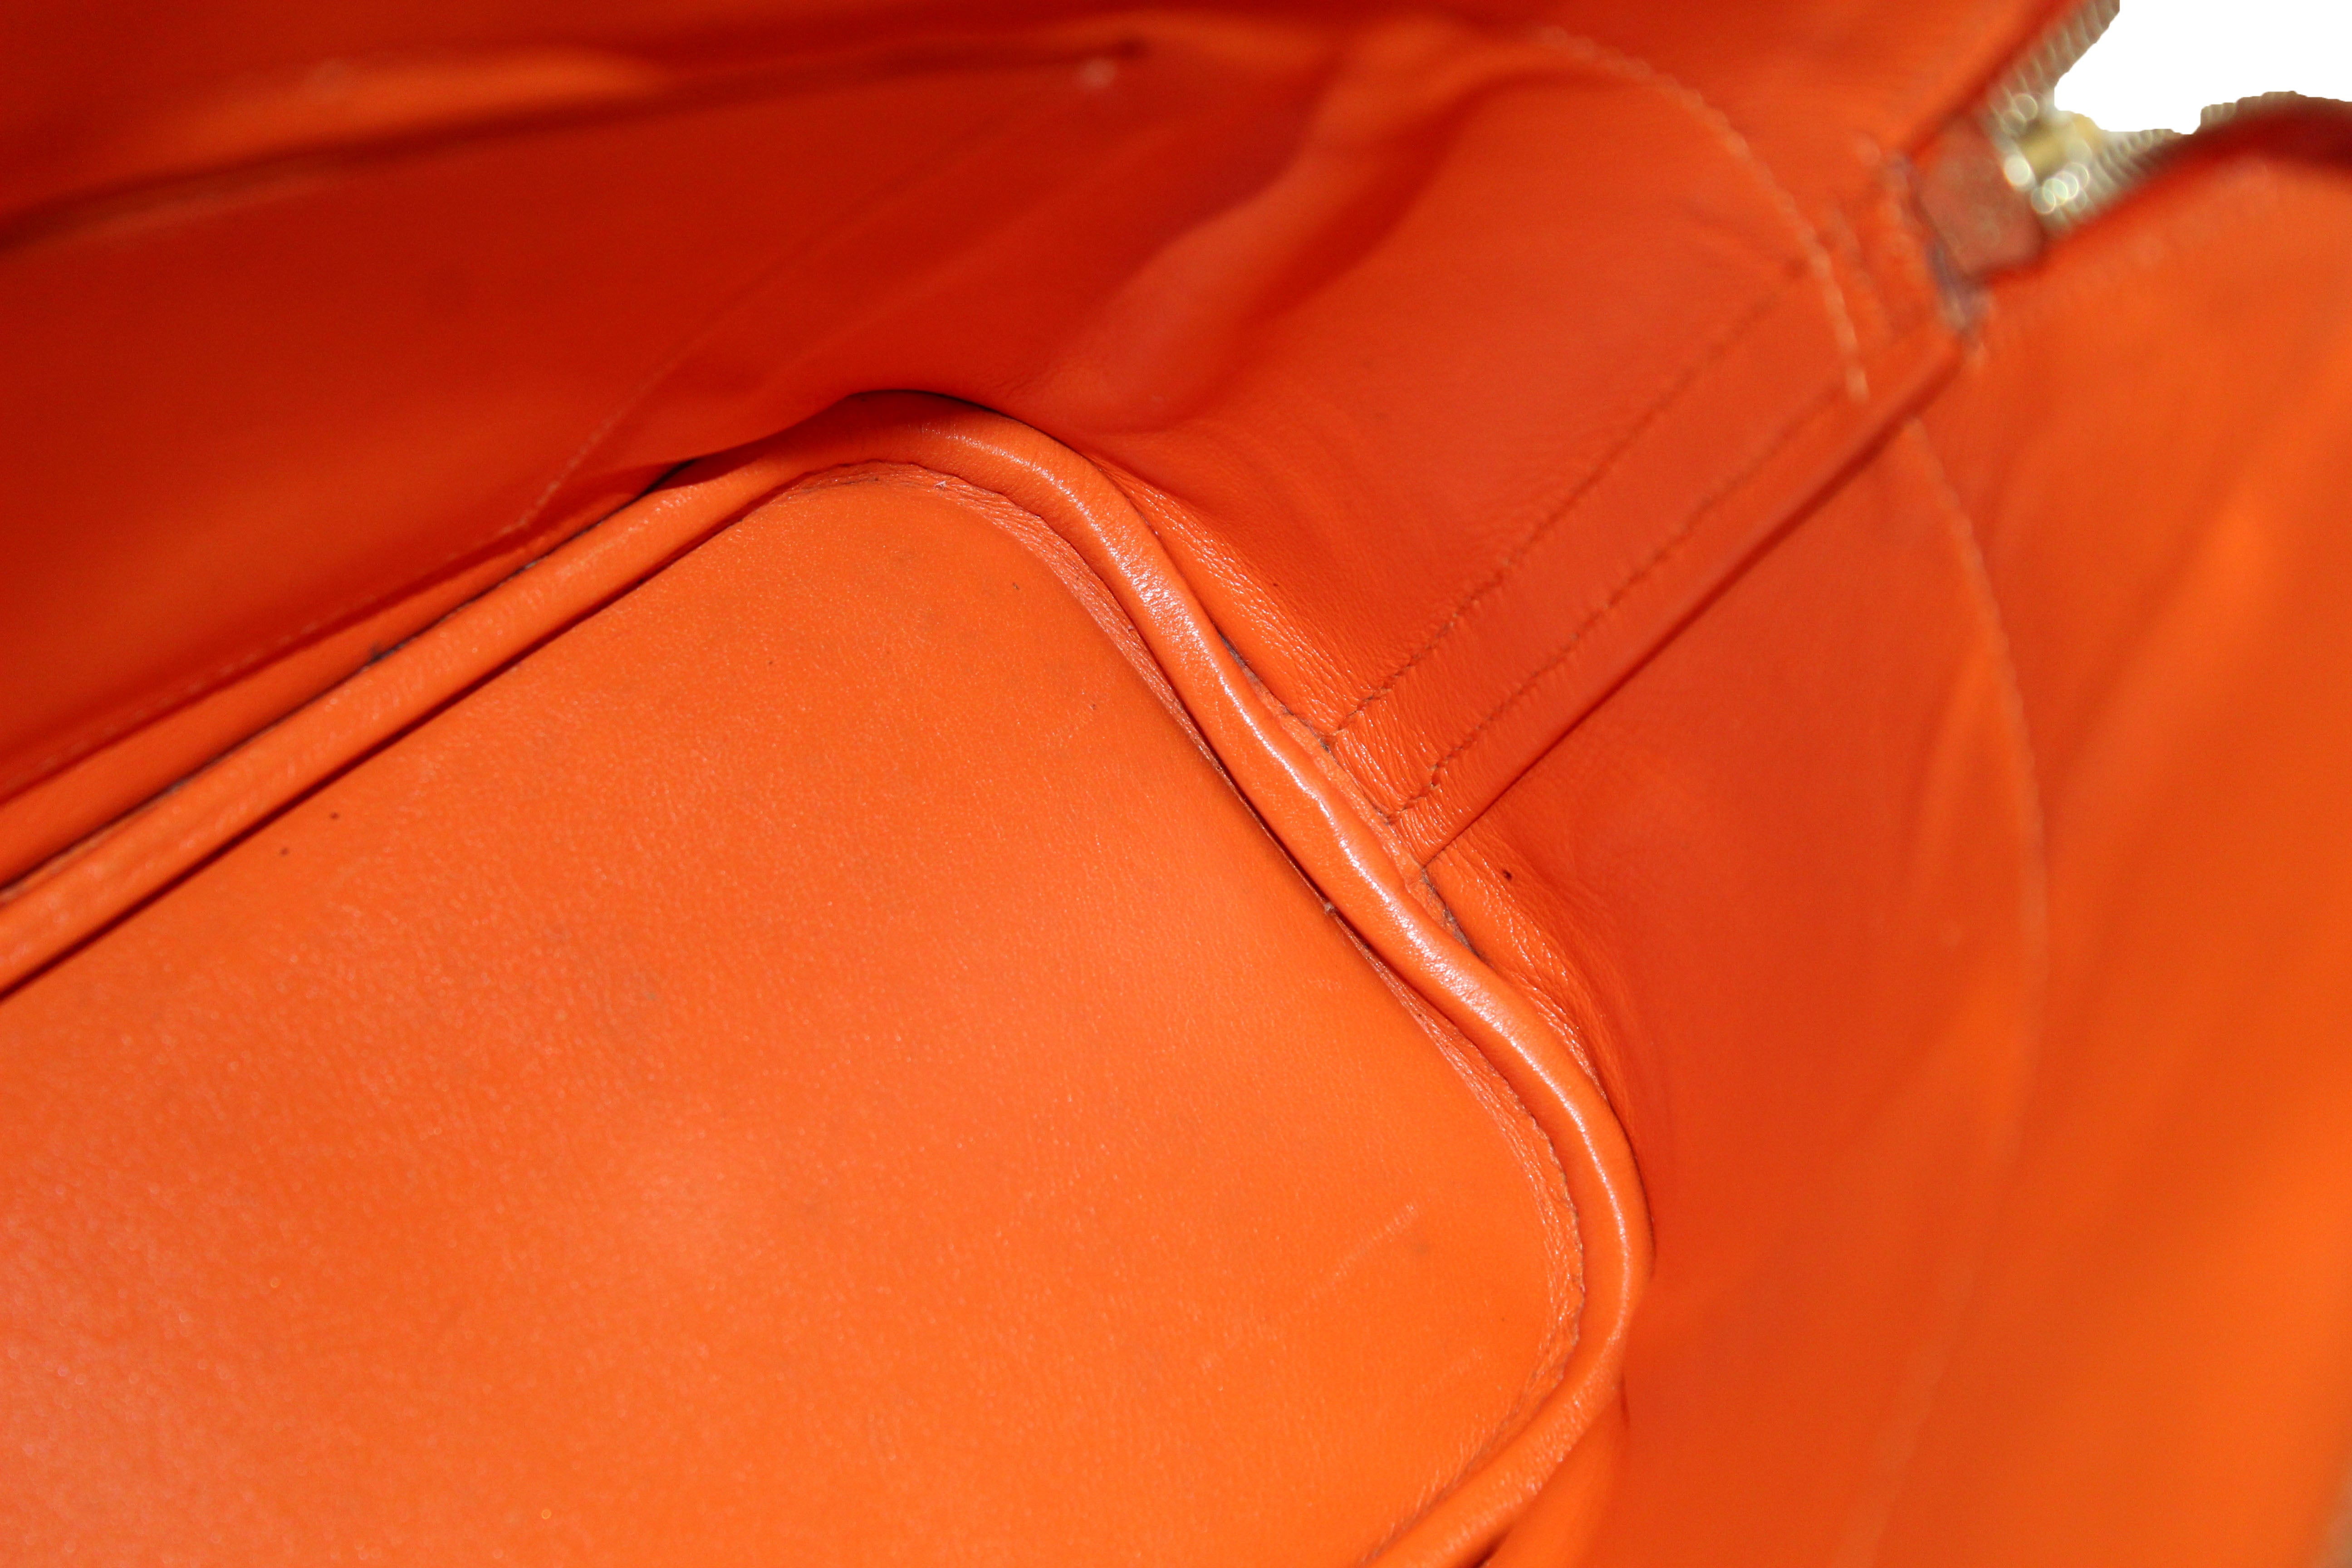 Louis Vuitton Paint Can Orange Leather Shoulder Bag (Pre-Owned)